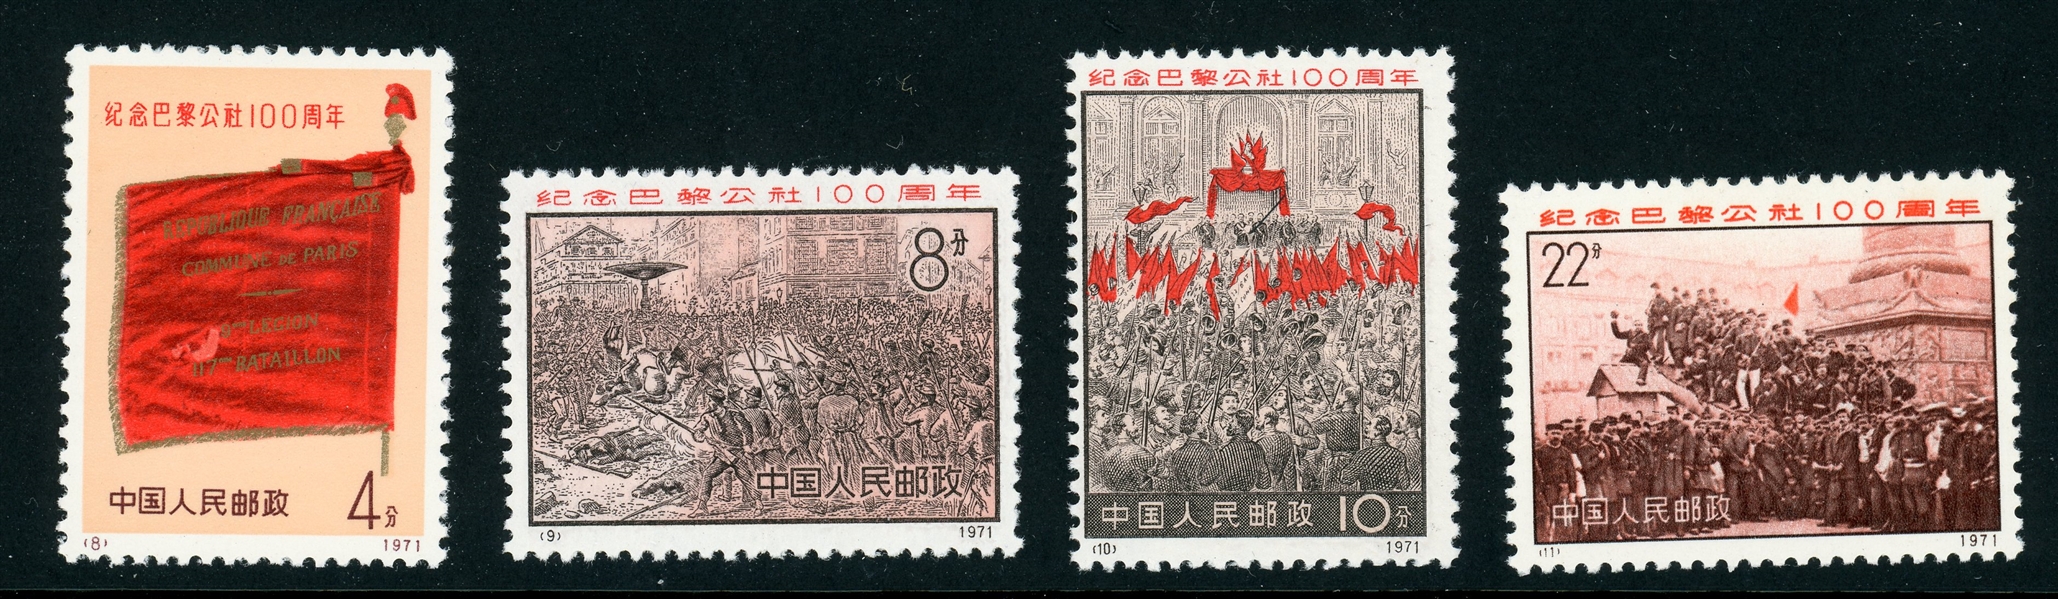 People's Republic of China Scott 1054-1057 MH Complete Set - Paris Commune 1971 (SCV $256.75)